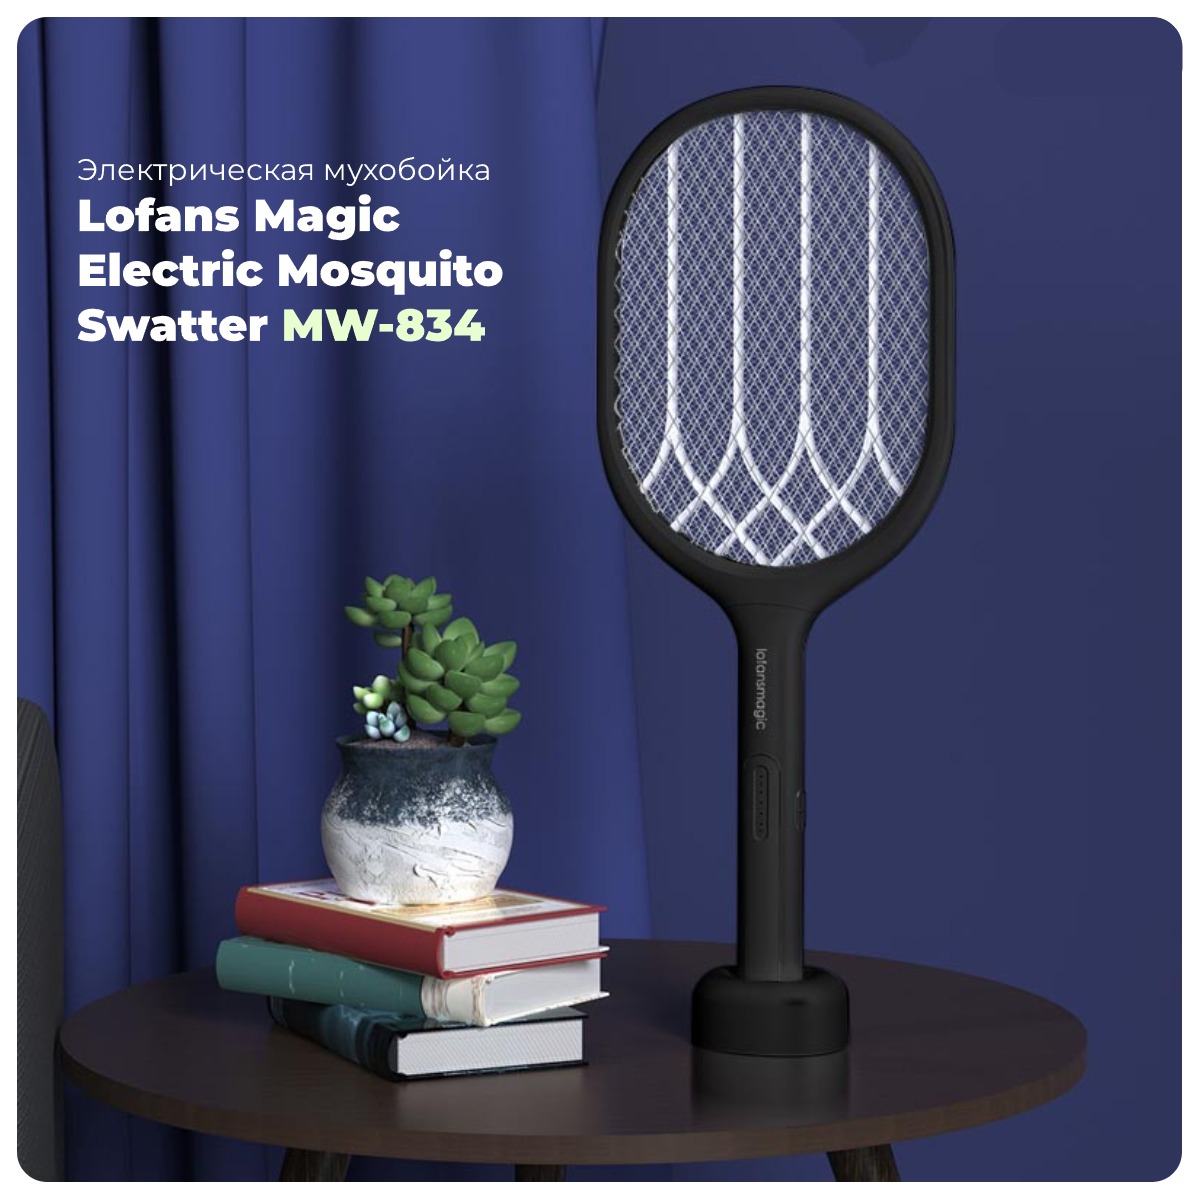 Lofans-Magic-Electric-Mosquito-Swatter-MW-834-01